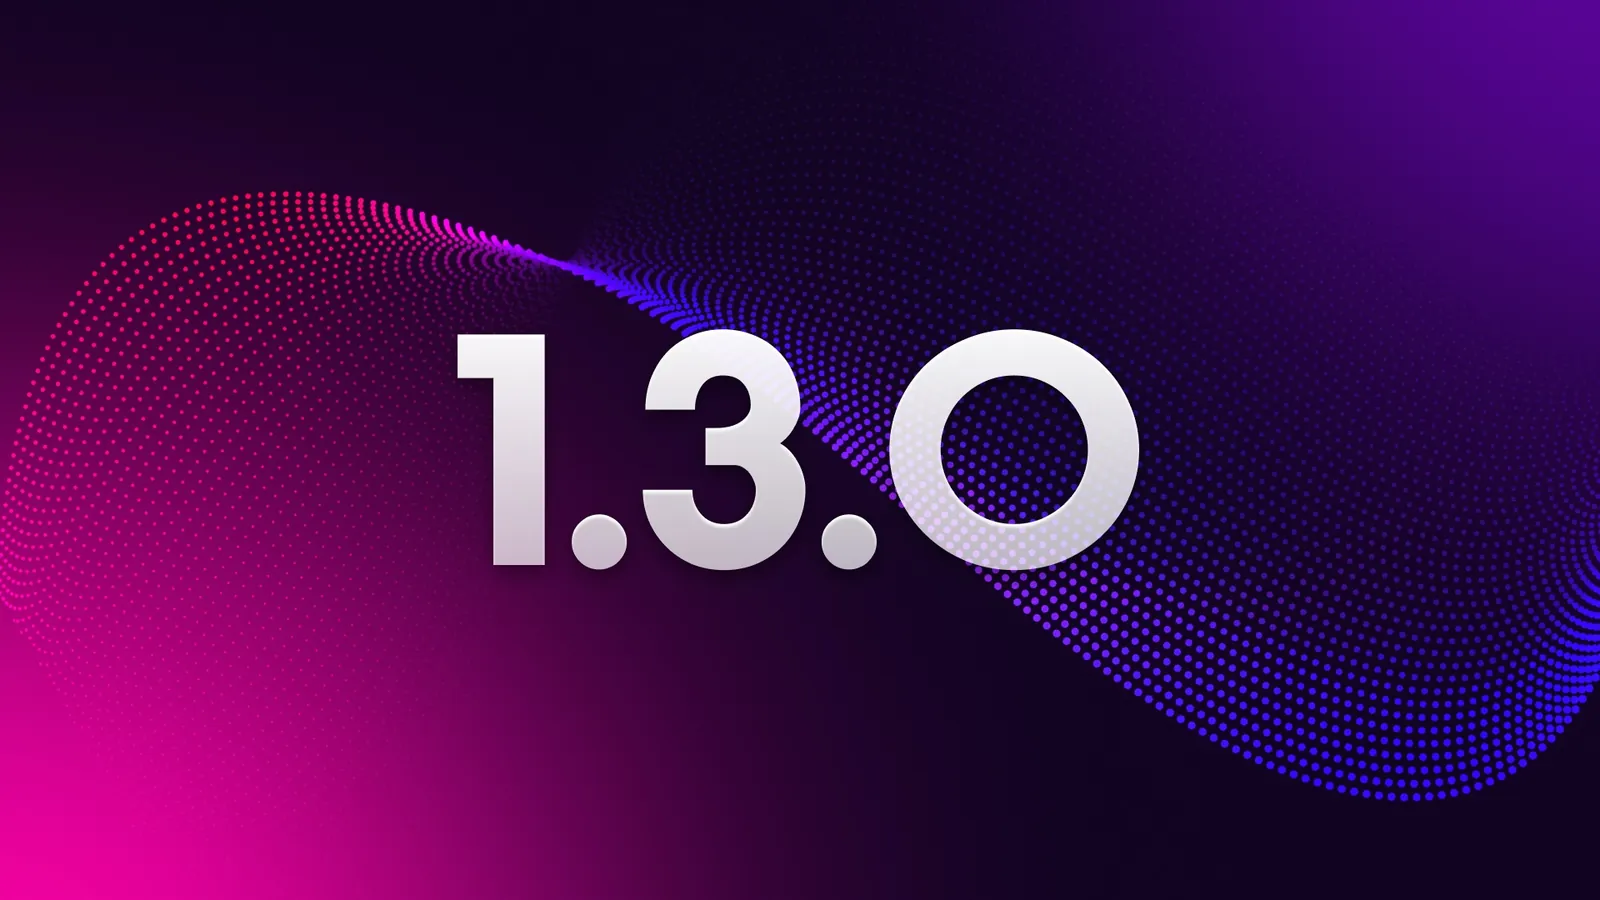 v1.3.0 is live! 🎉